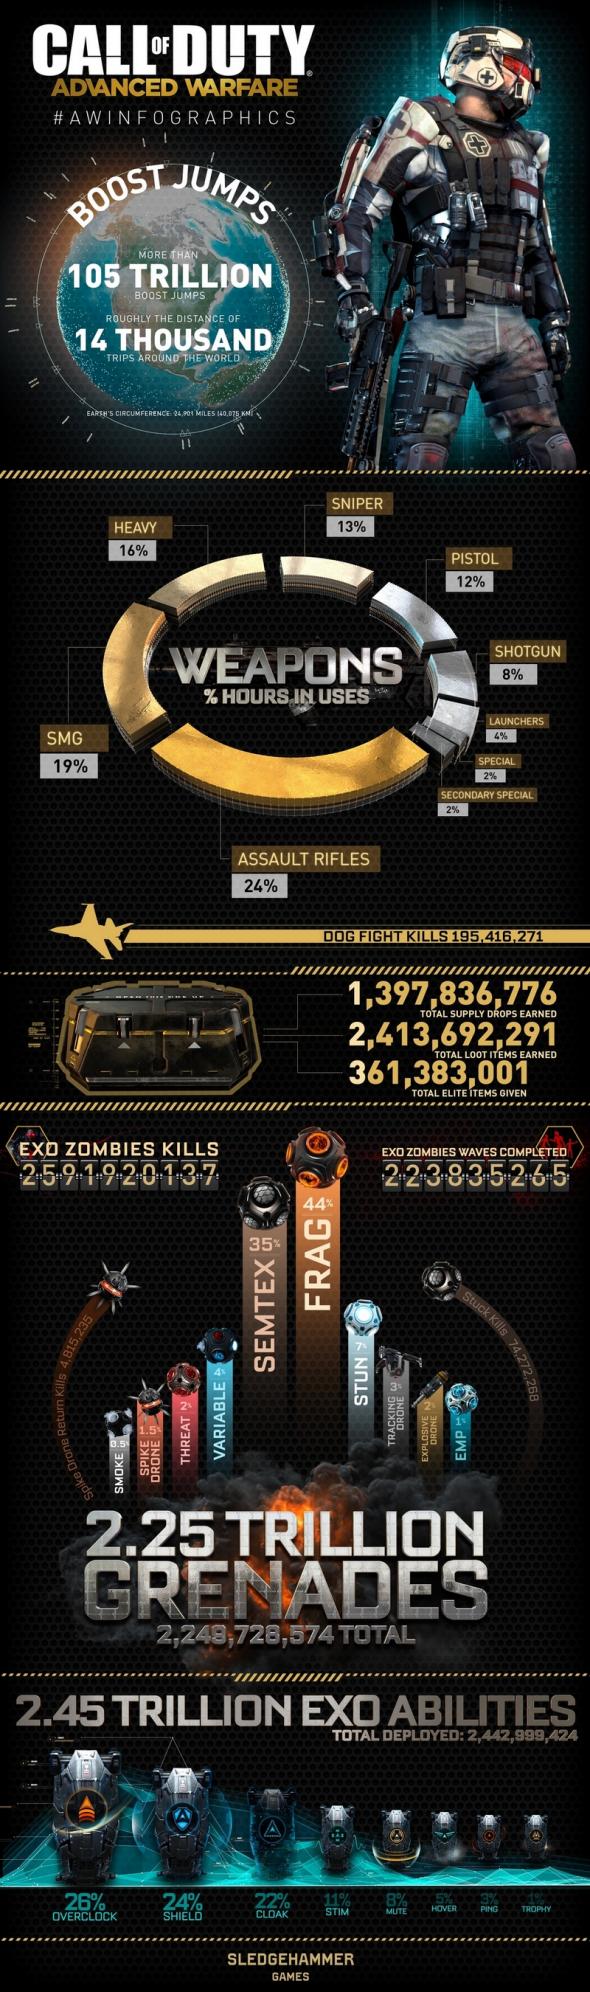 call-of-duty-advanced-warfare-infographic.jpg